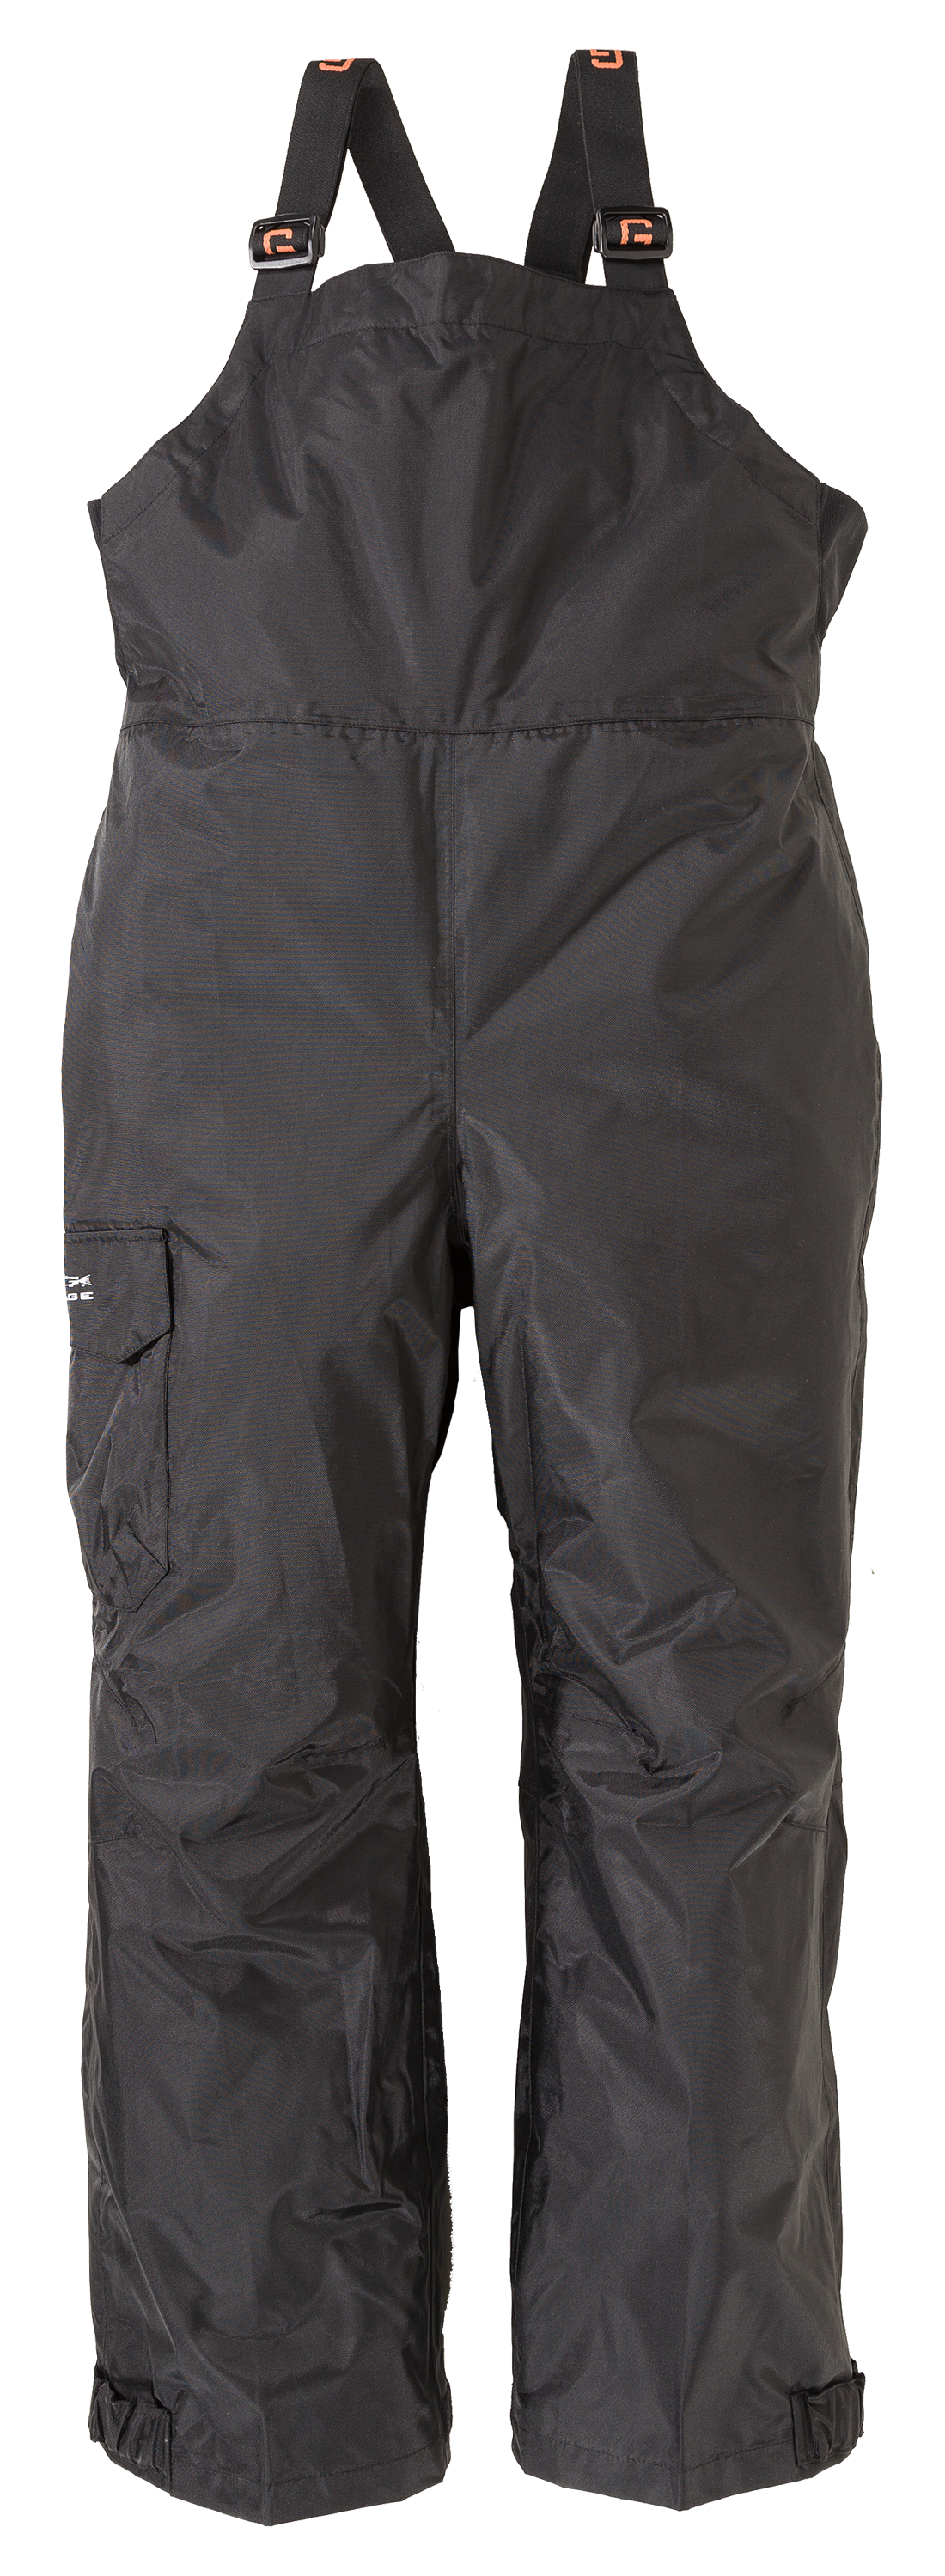 GRUNDÉNS Weather Watch waterproof BIB pants / overalls, breathable